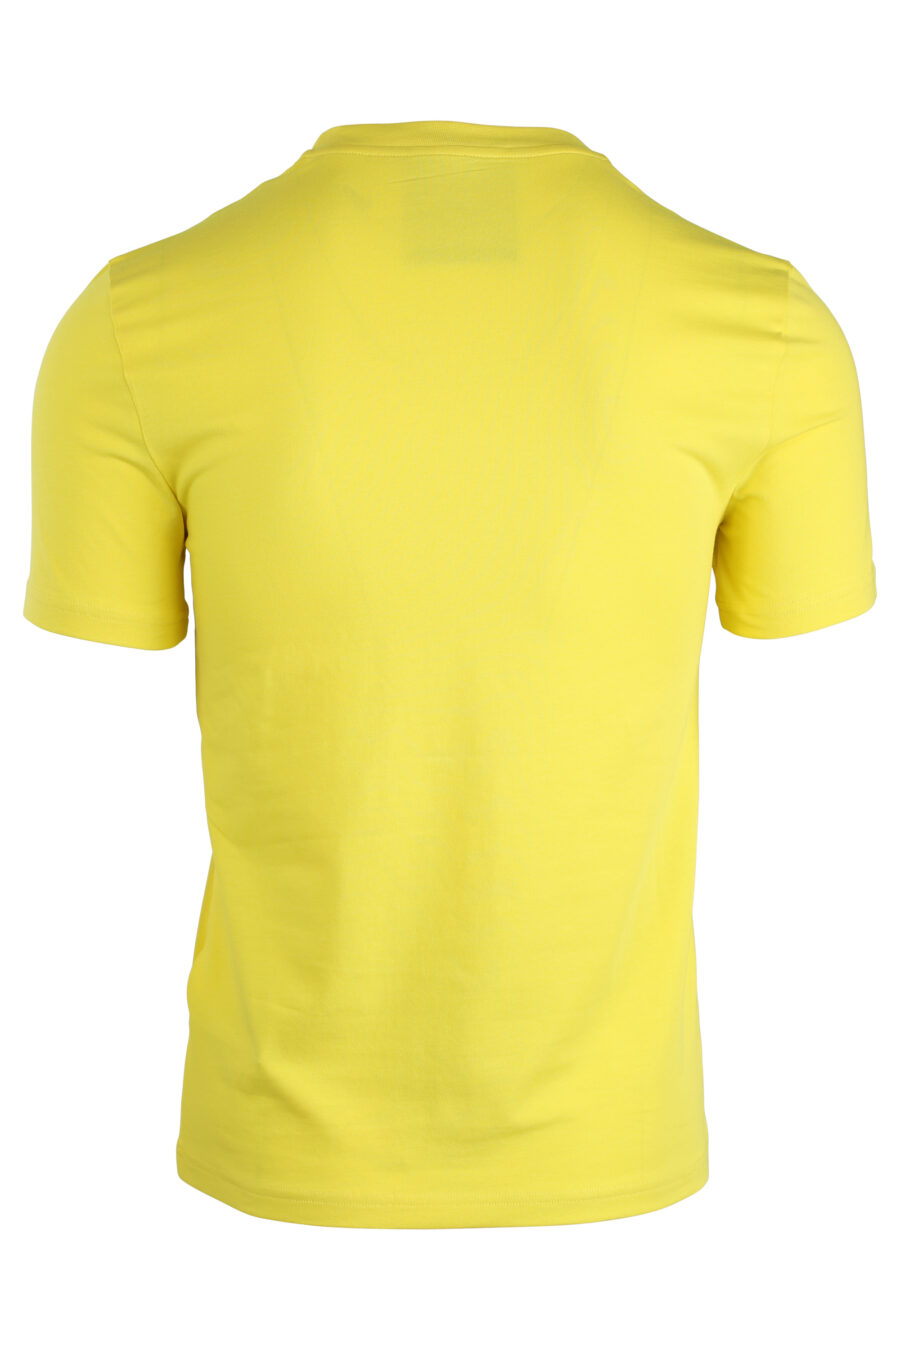 T-shirt amarela com logótipo duplo "smiley" maxi - IMG 1675